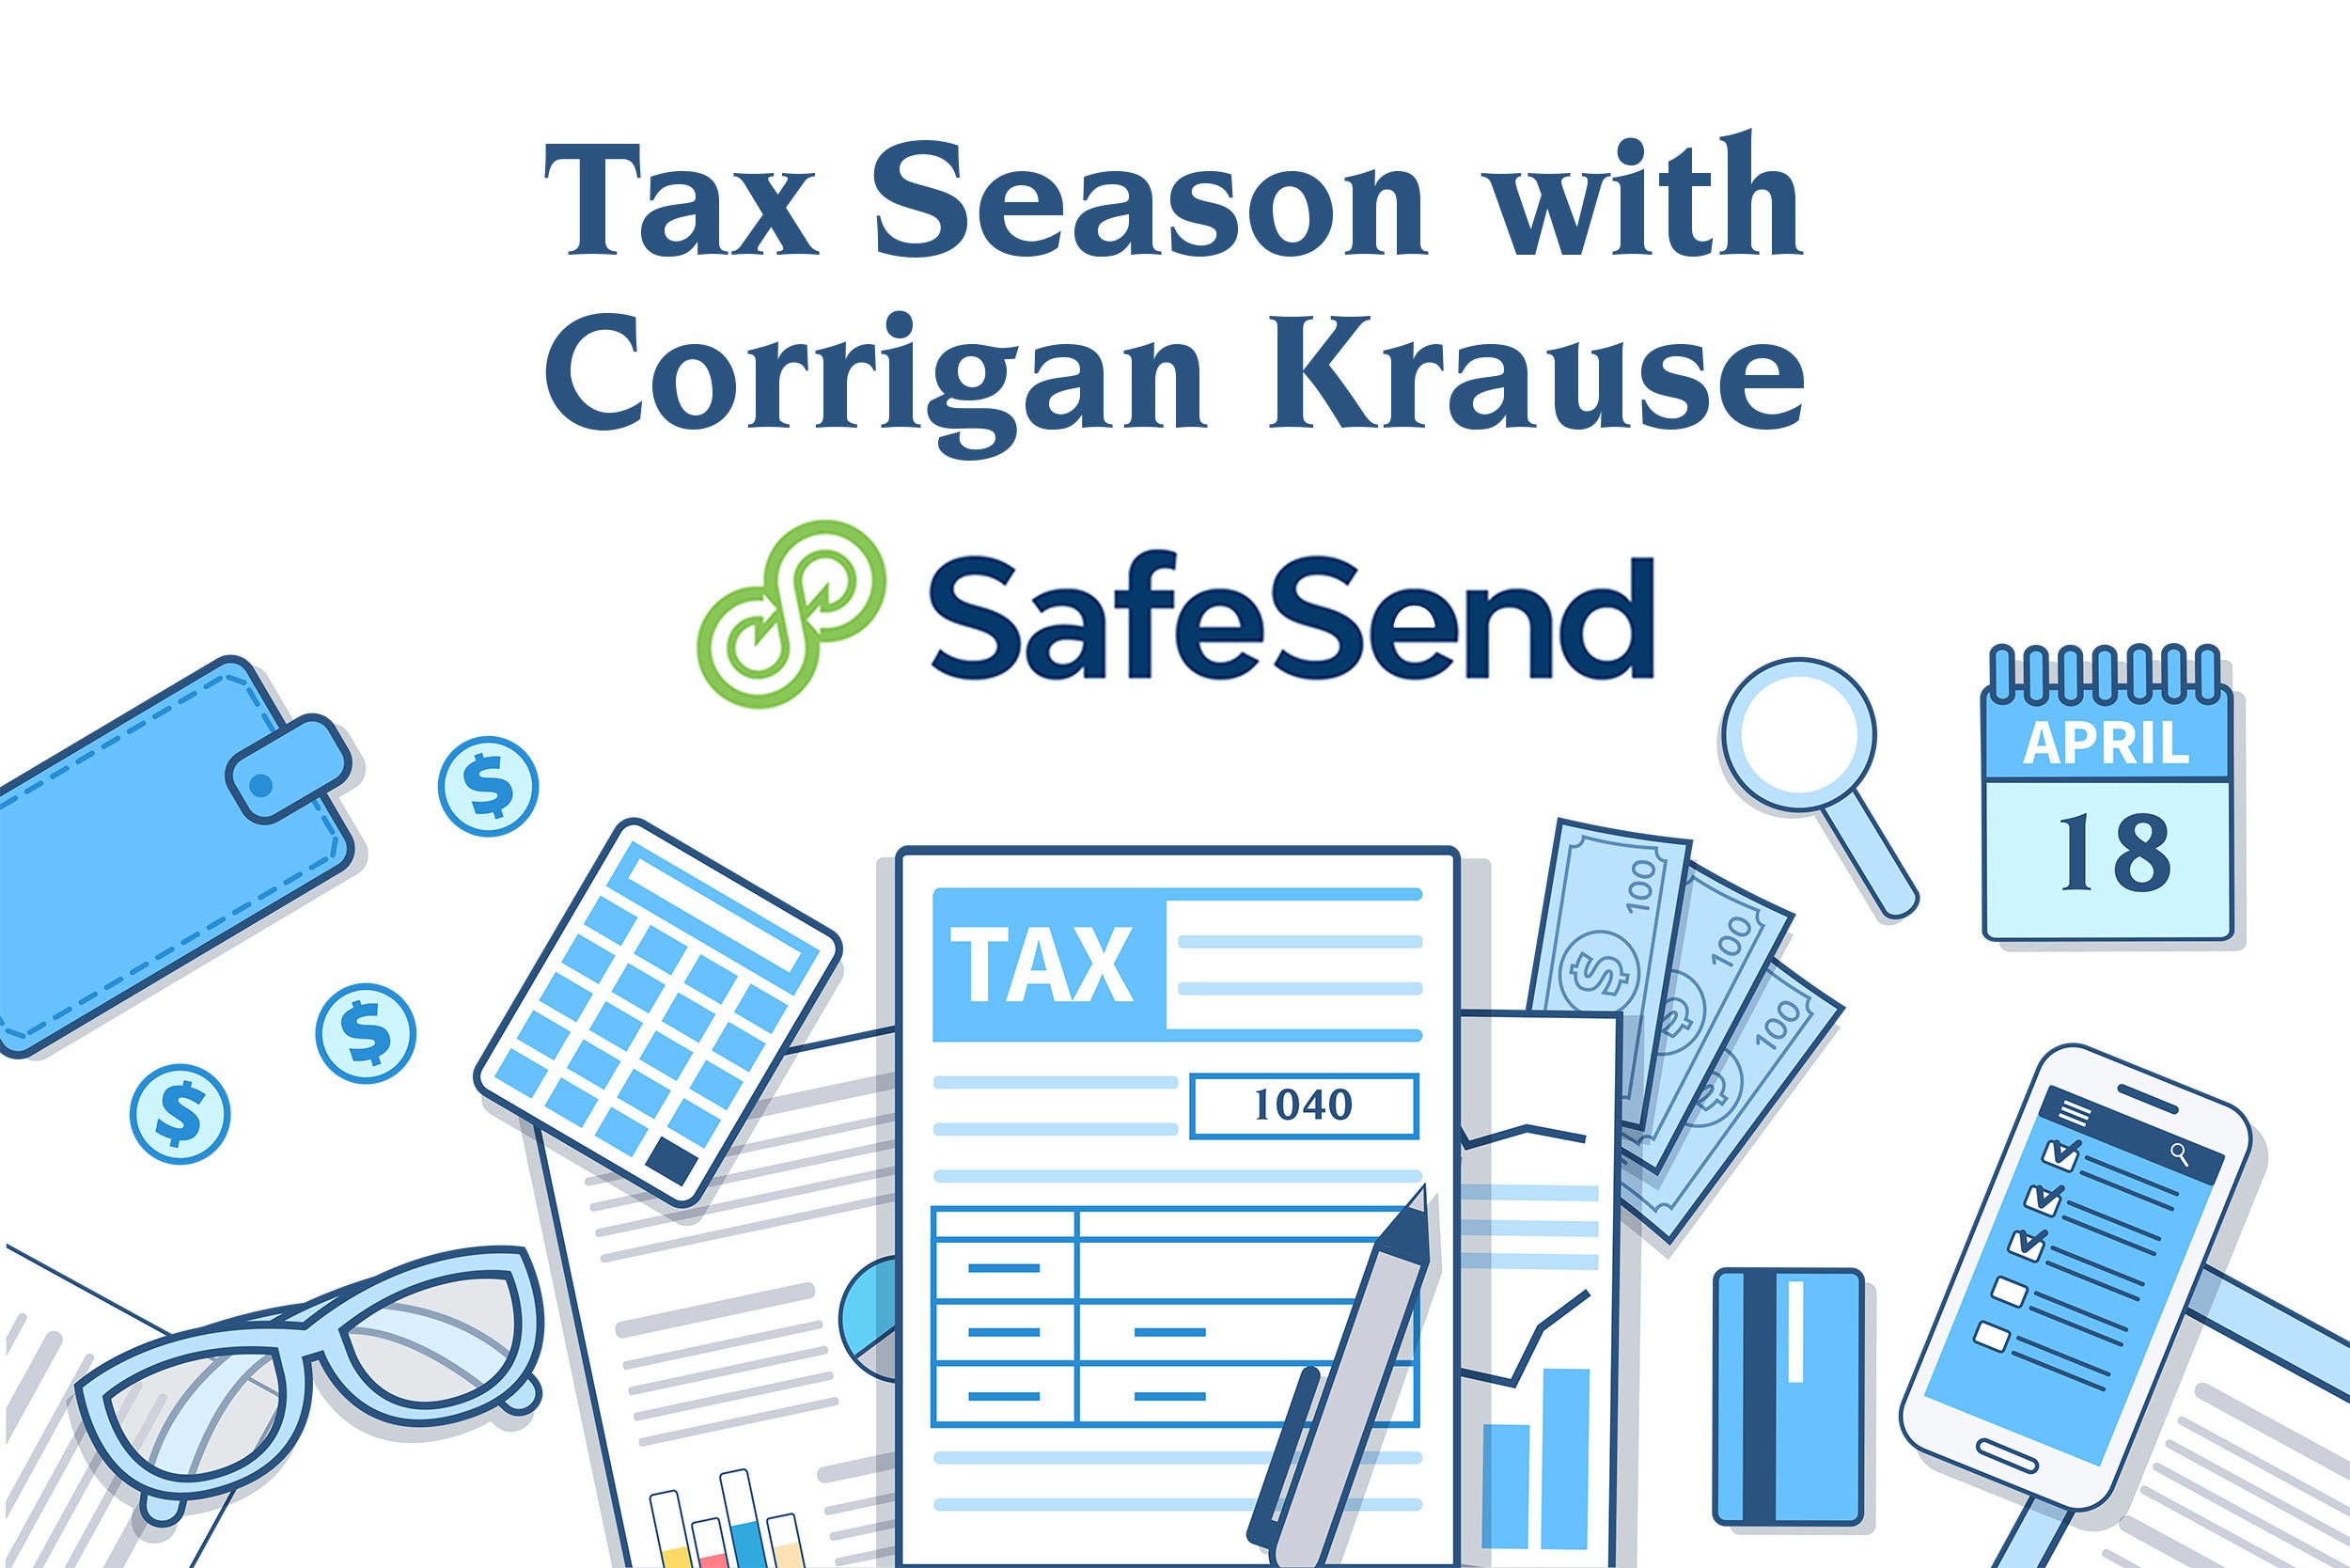 Tax Season with Corrigan Krause